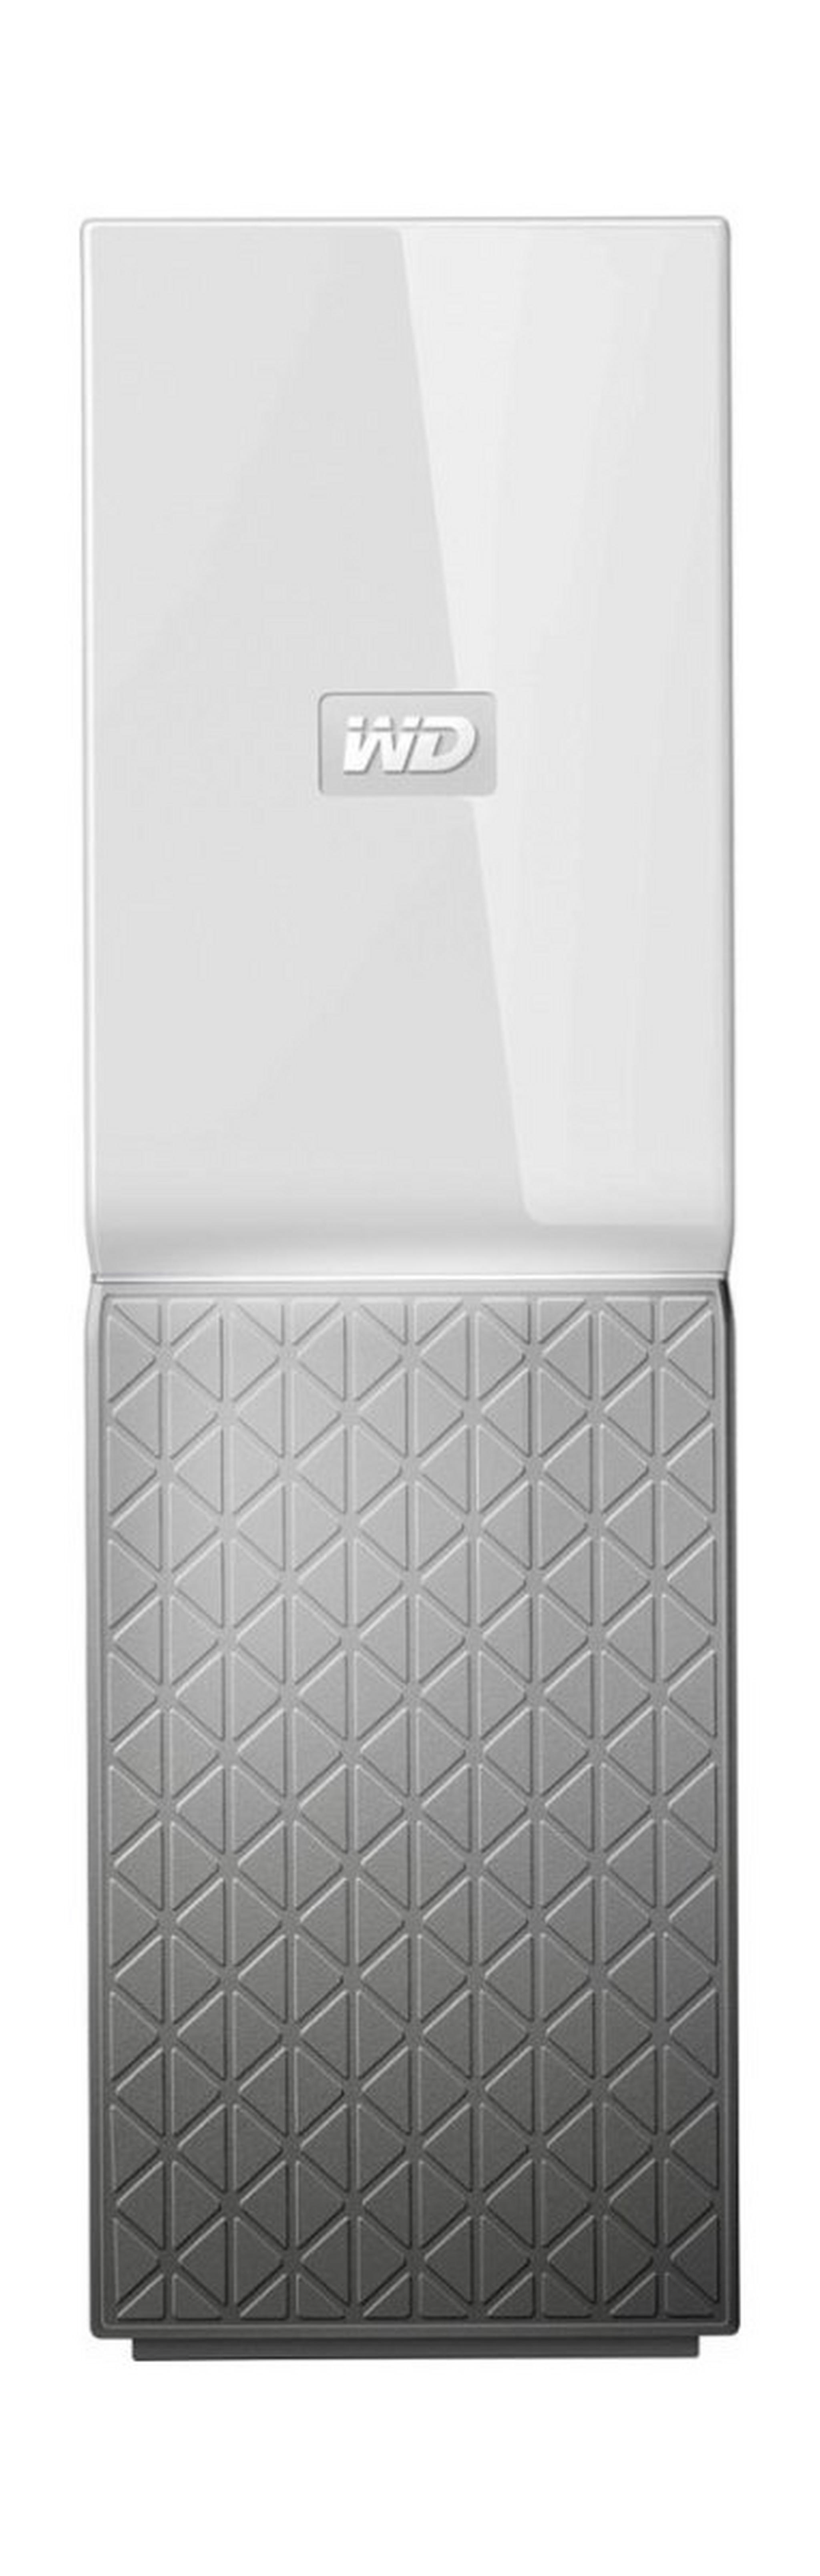 Western Digital 4TB MyCloud Home Hard Drive (WDBVXC0040HWT) - White